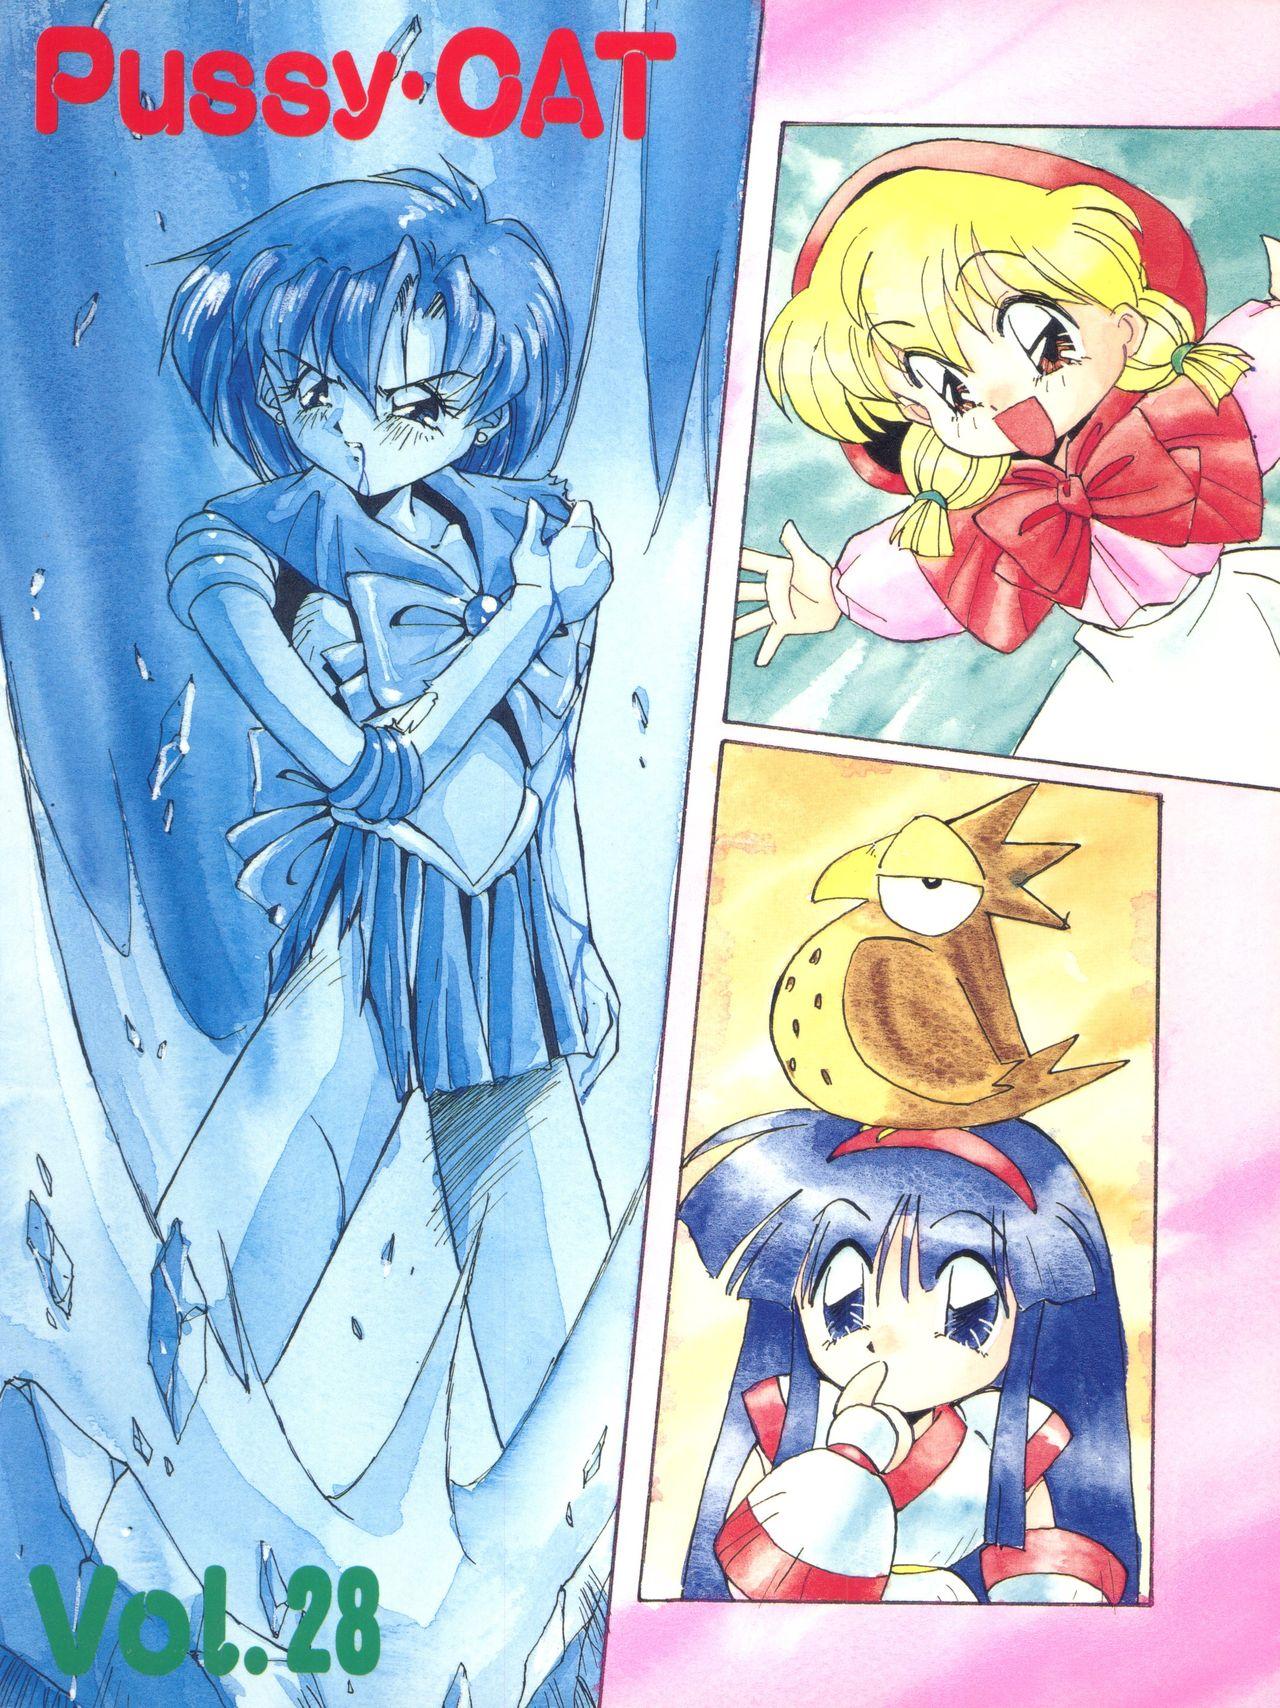 Fat Ass Pussy Cat Vol. 28 - Sailor moon Ah my goddess Akazukin cha cha World heroes Rebolando - Page 105